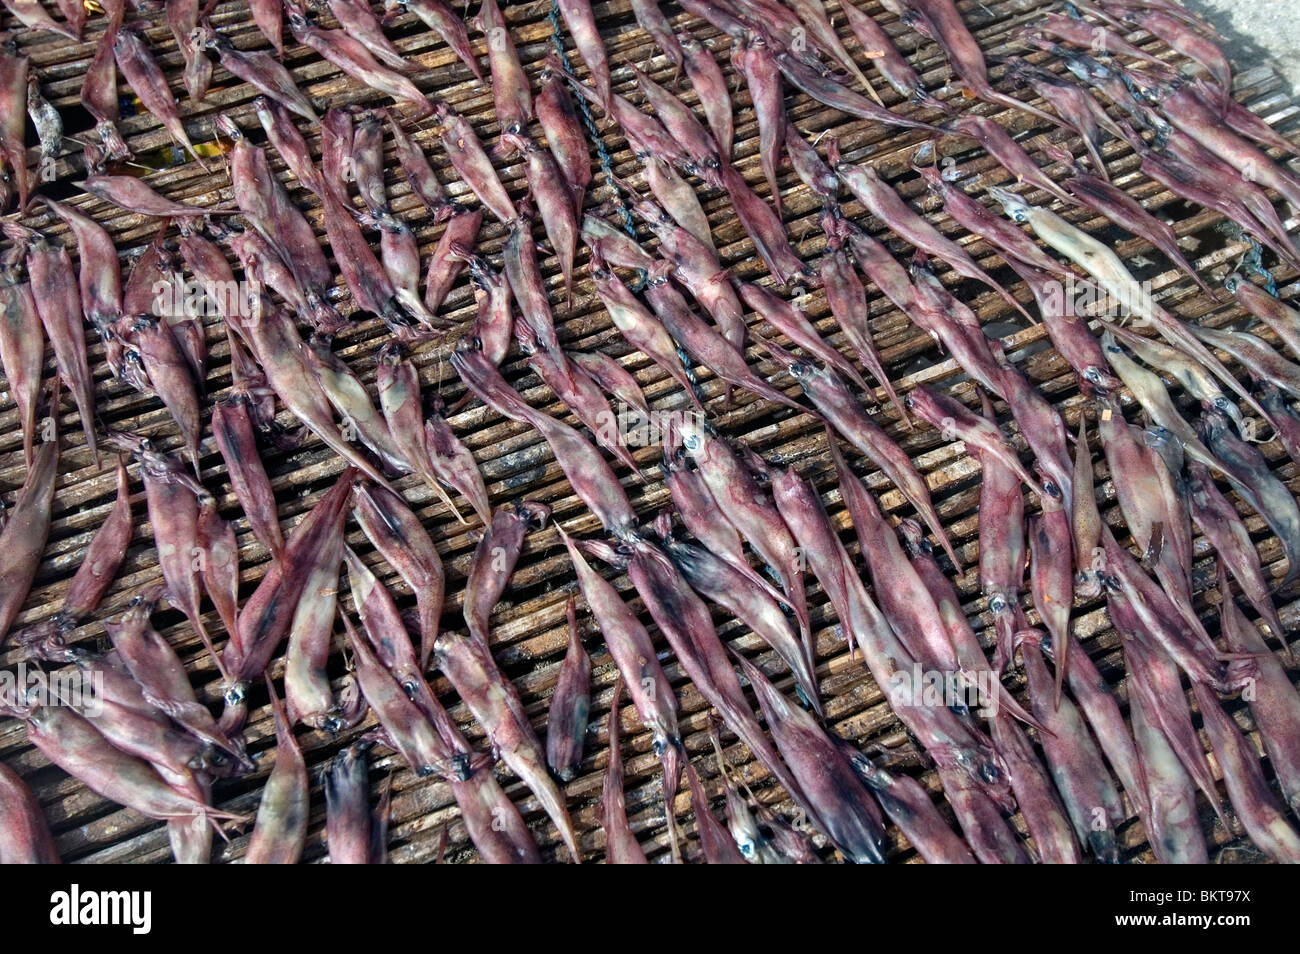 Sundried squid on rack in bajau village, Komodo Marine Park, Indonesia Stock Photo